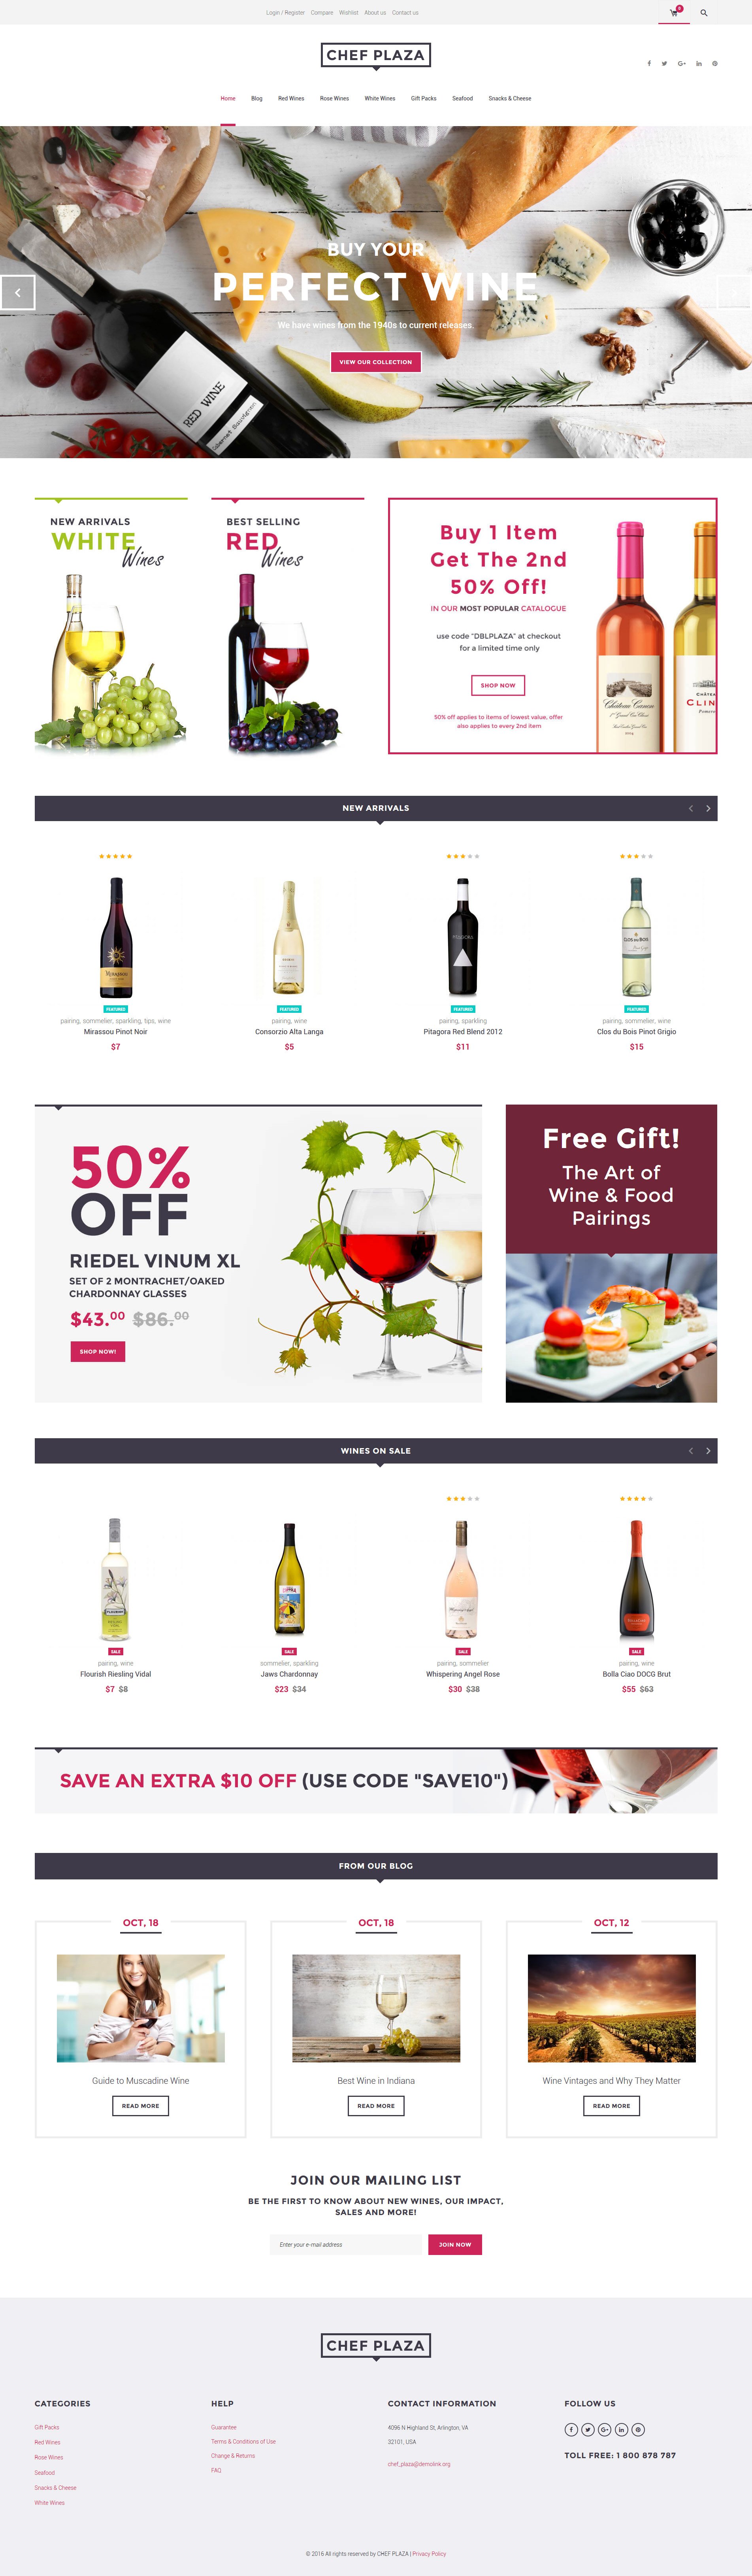 Chef Plaza Food And Wine Store WooCommerce Theme New Screenshots BIG